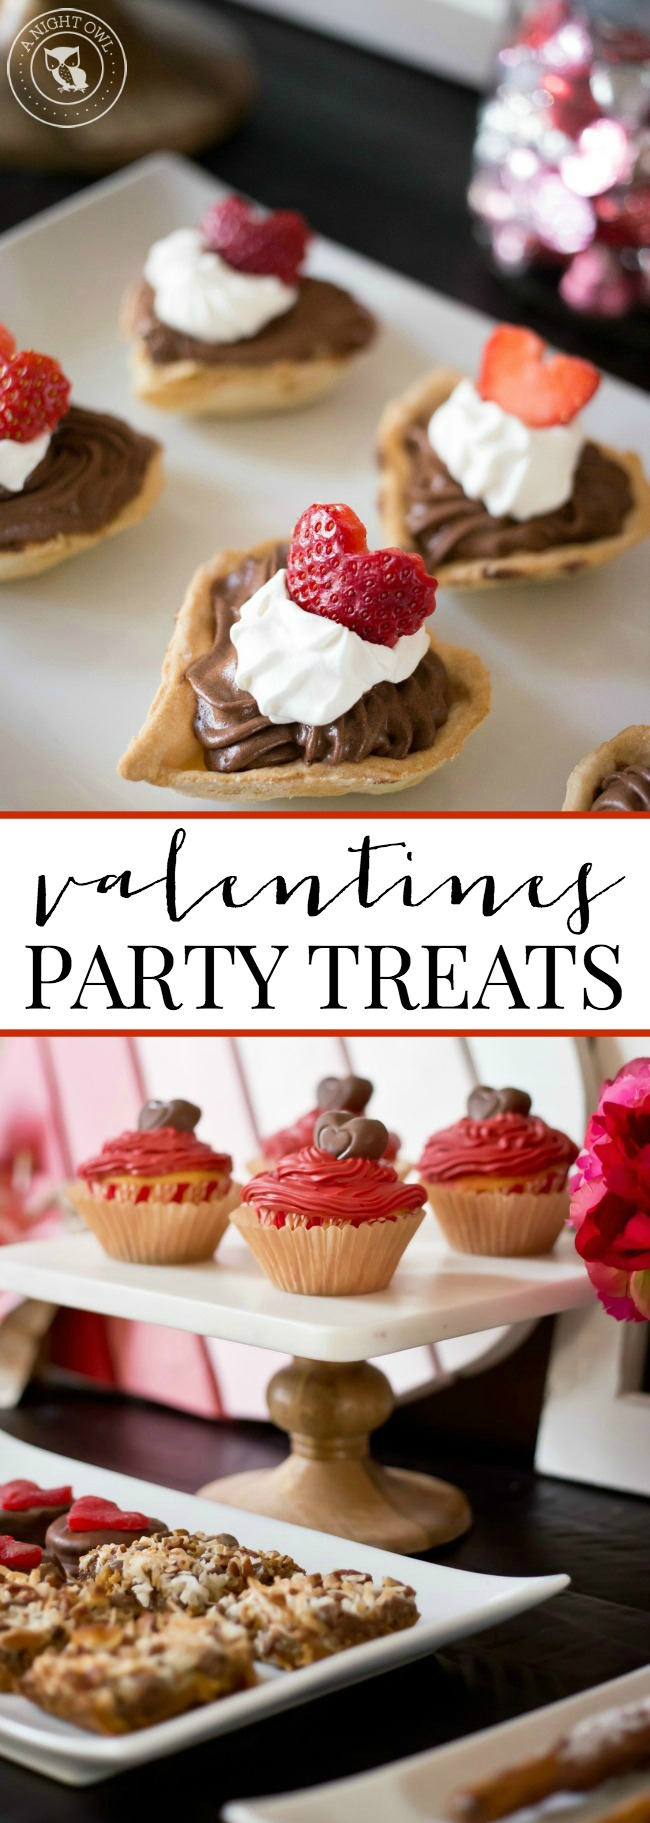 Valentines Party Treats | anightowlblog.com